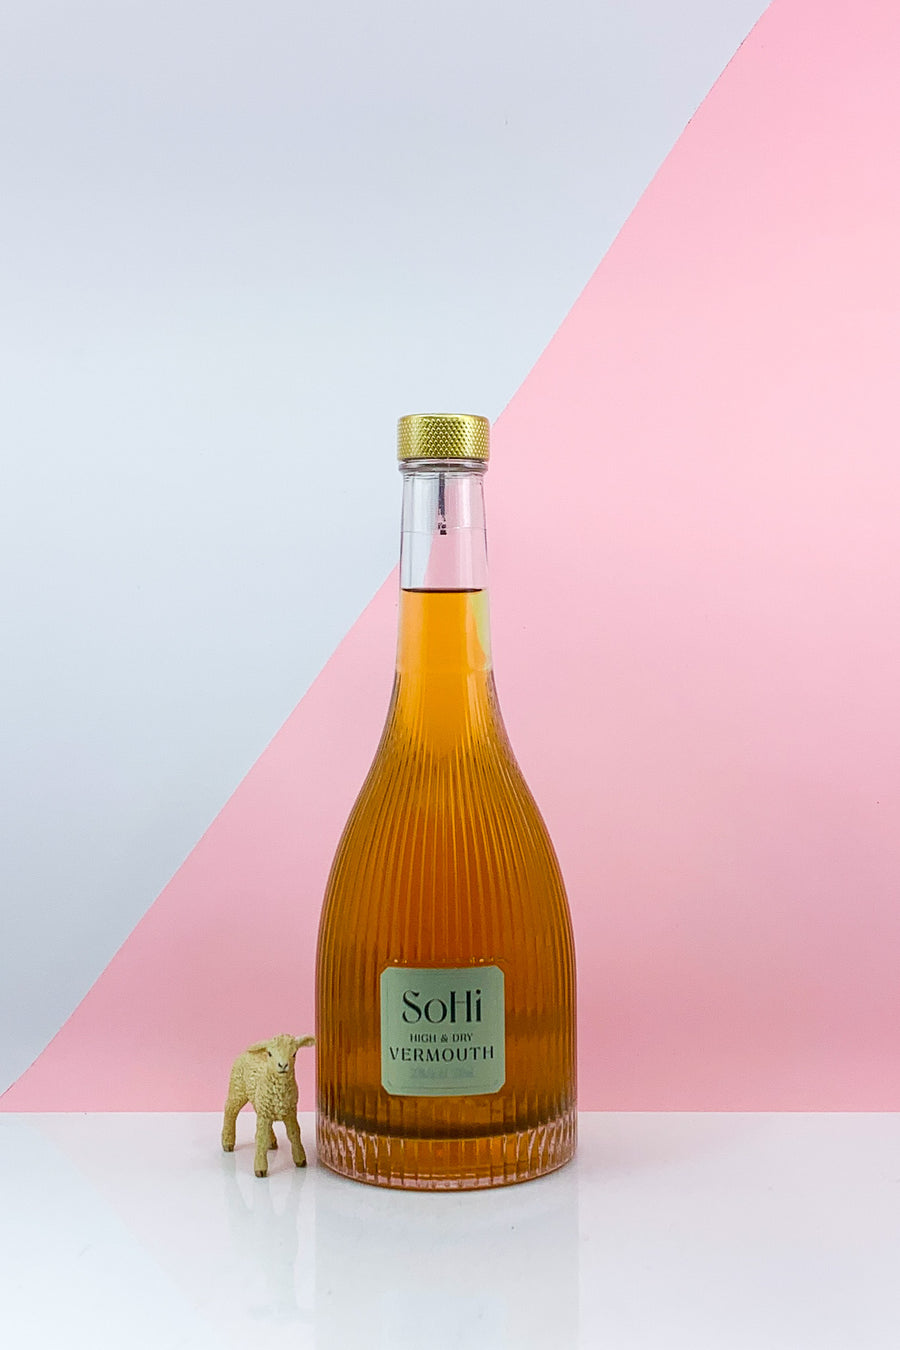 SoHi High & Dry Vermouth